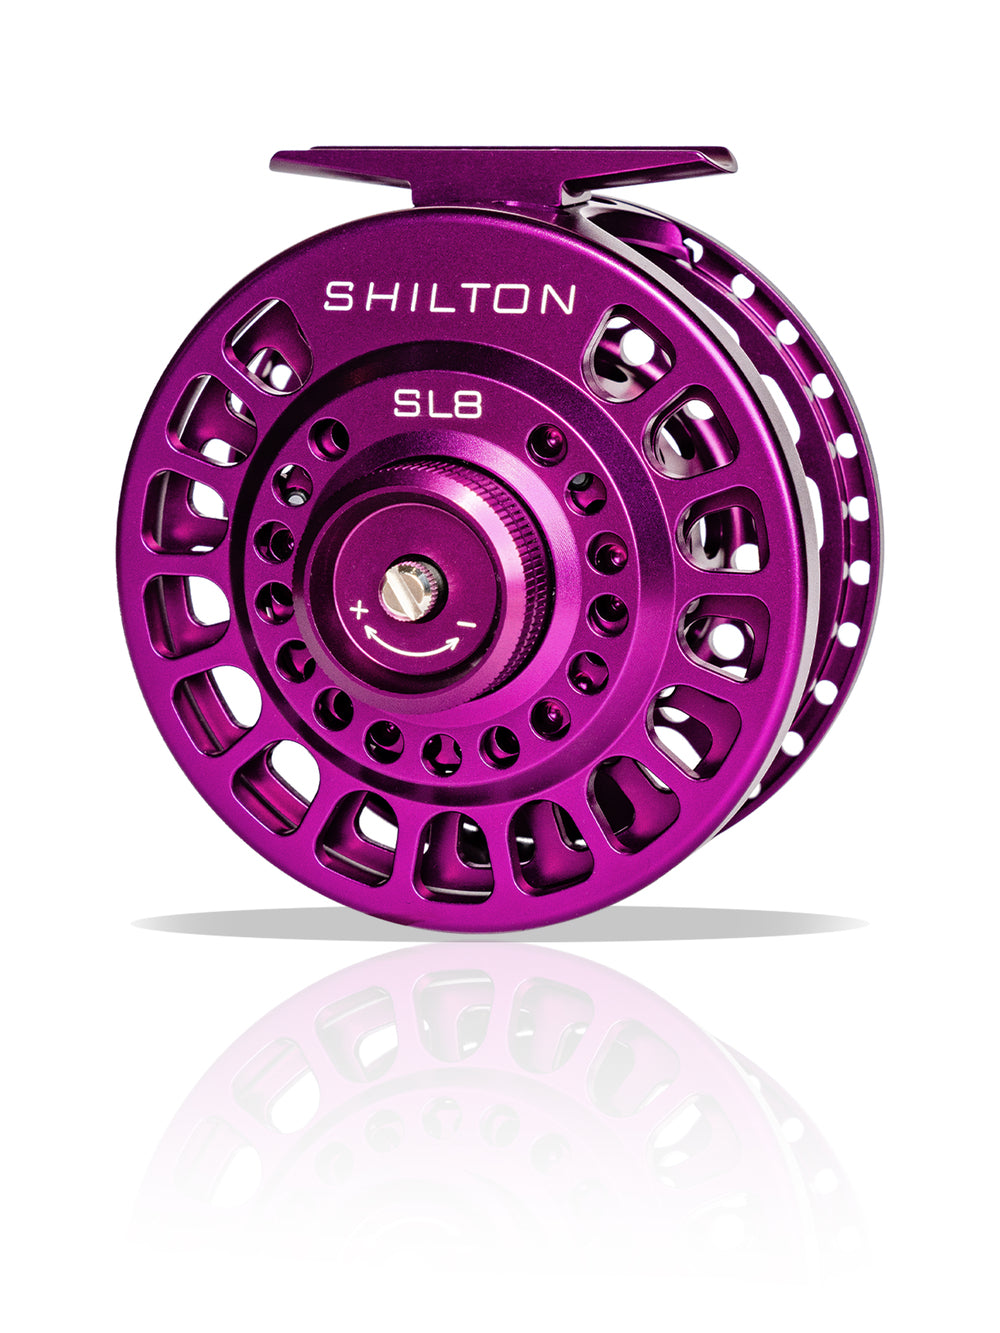 Shilton SL8 Reel (14-16wt) SL14 in Red